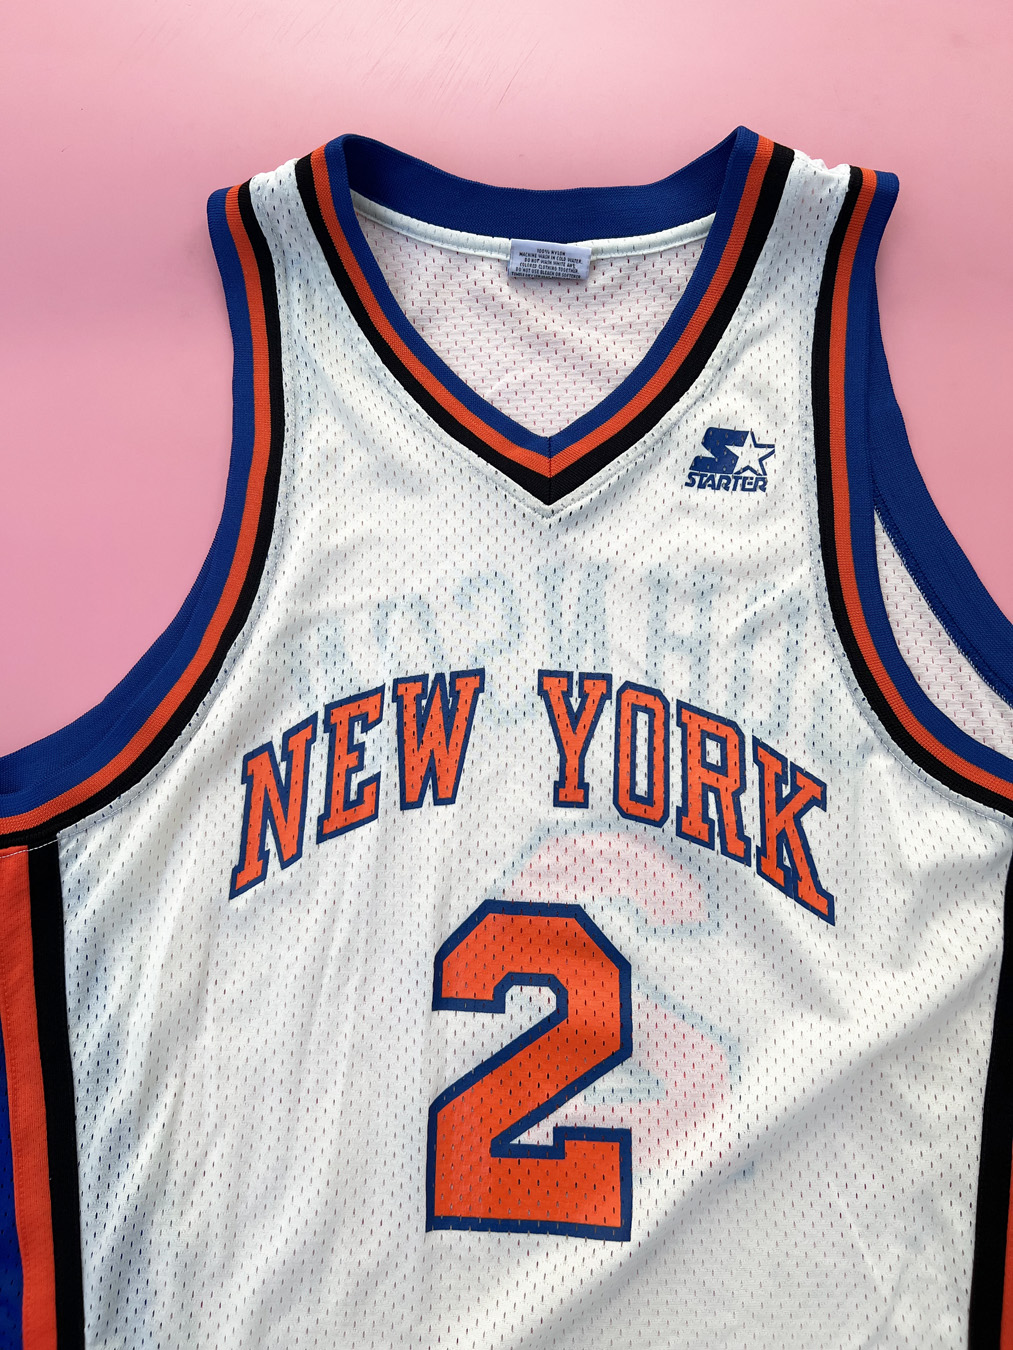 Buy Larry Johnson's Jersey at New York Knicks - Brooklyn Fizz